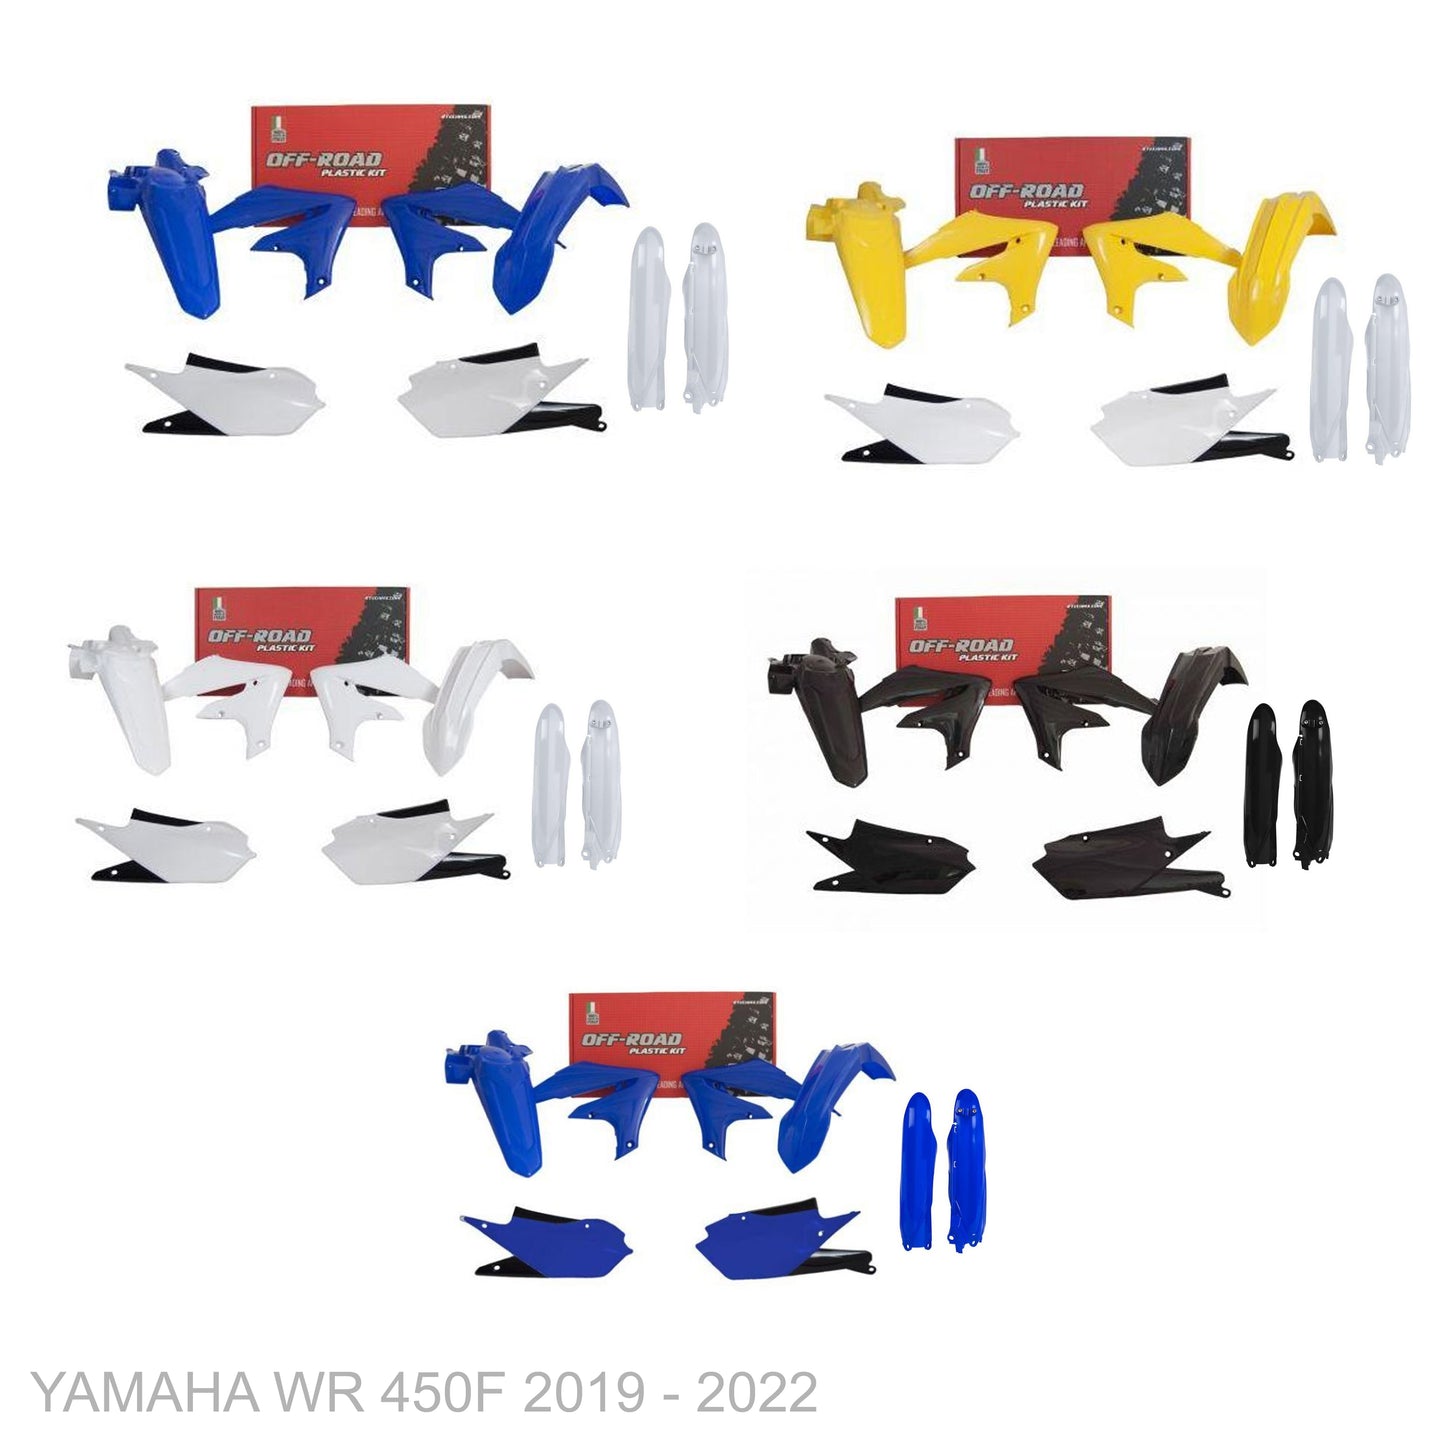 YAMAHA WR 450F 2019 - 2022 Retro Graphics Kit